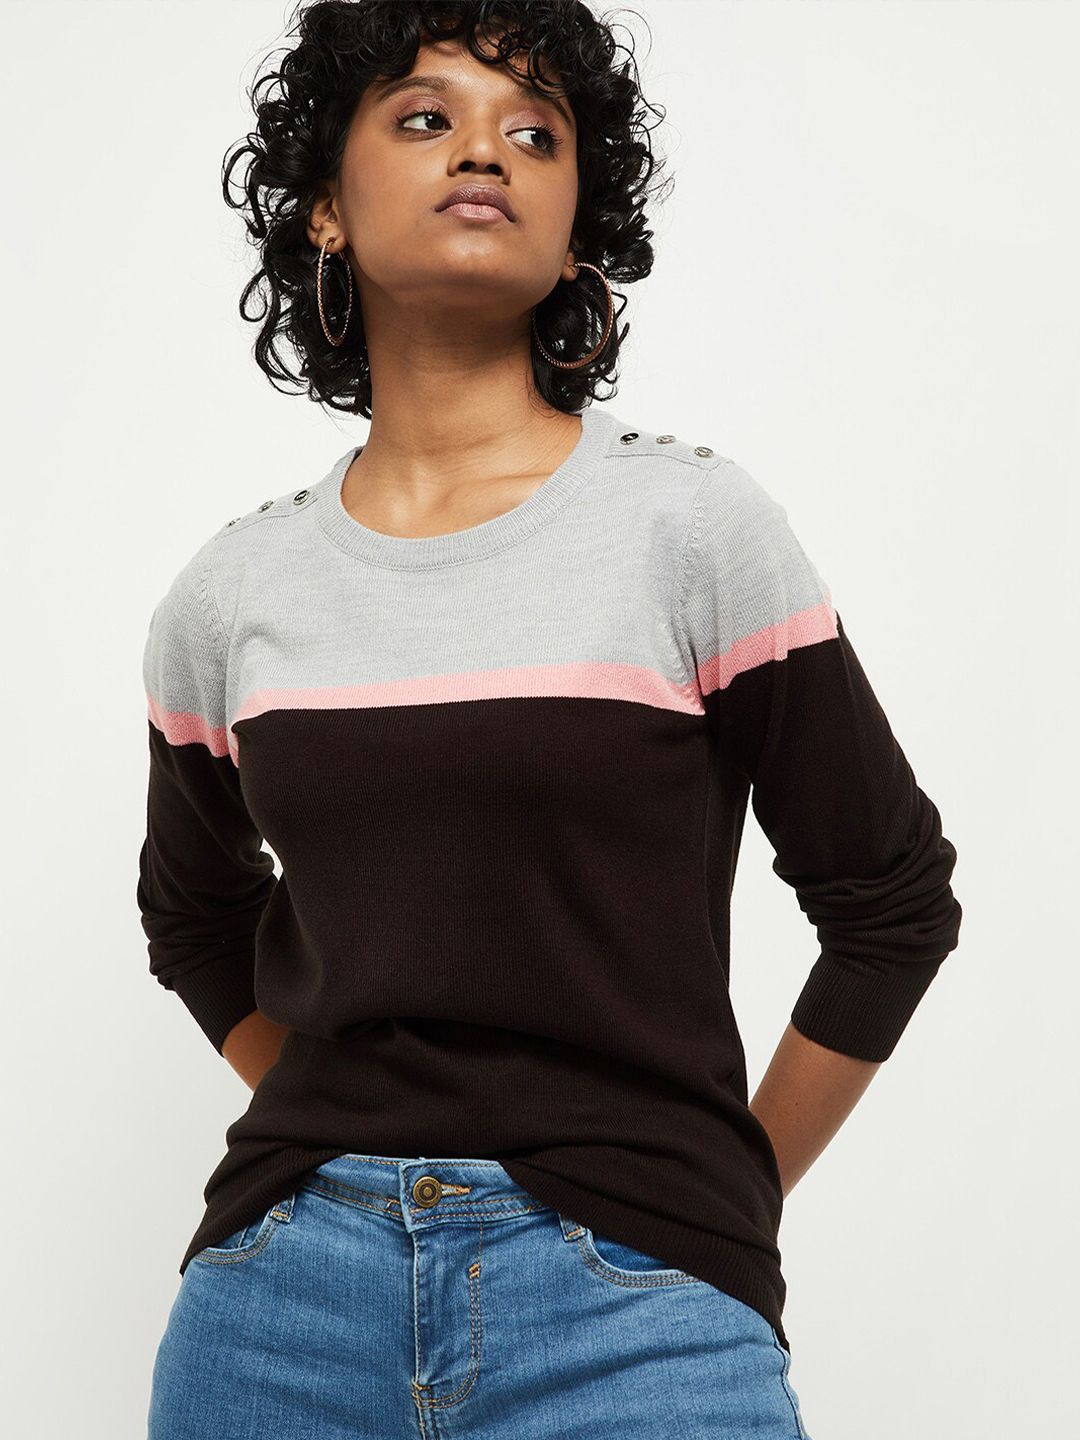 max Women Black & Grey Colourblocked Pullover Sweater Price in India